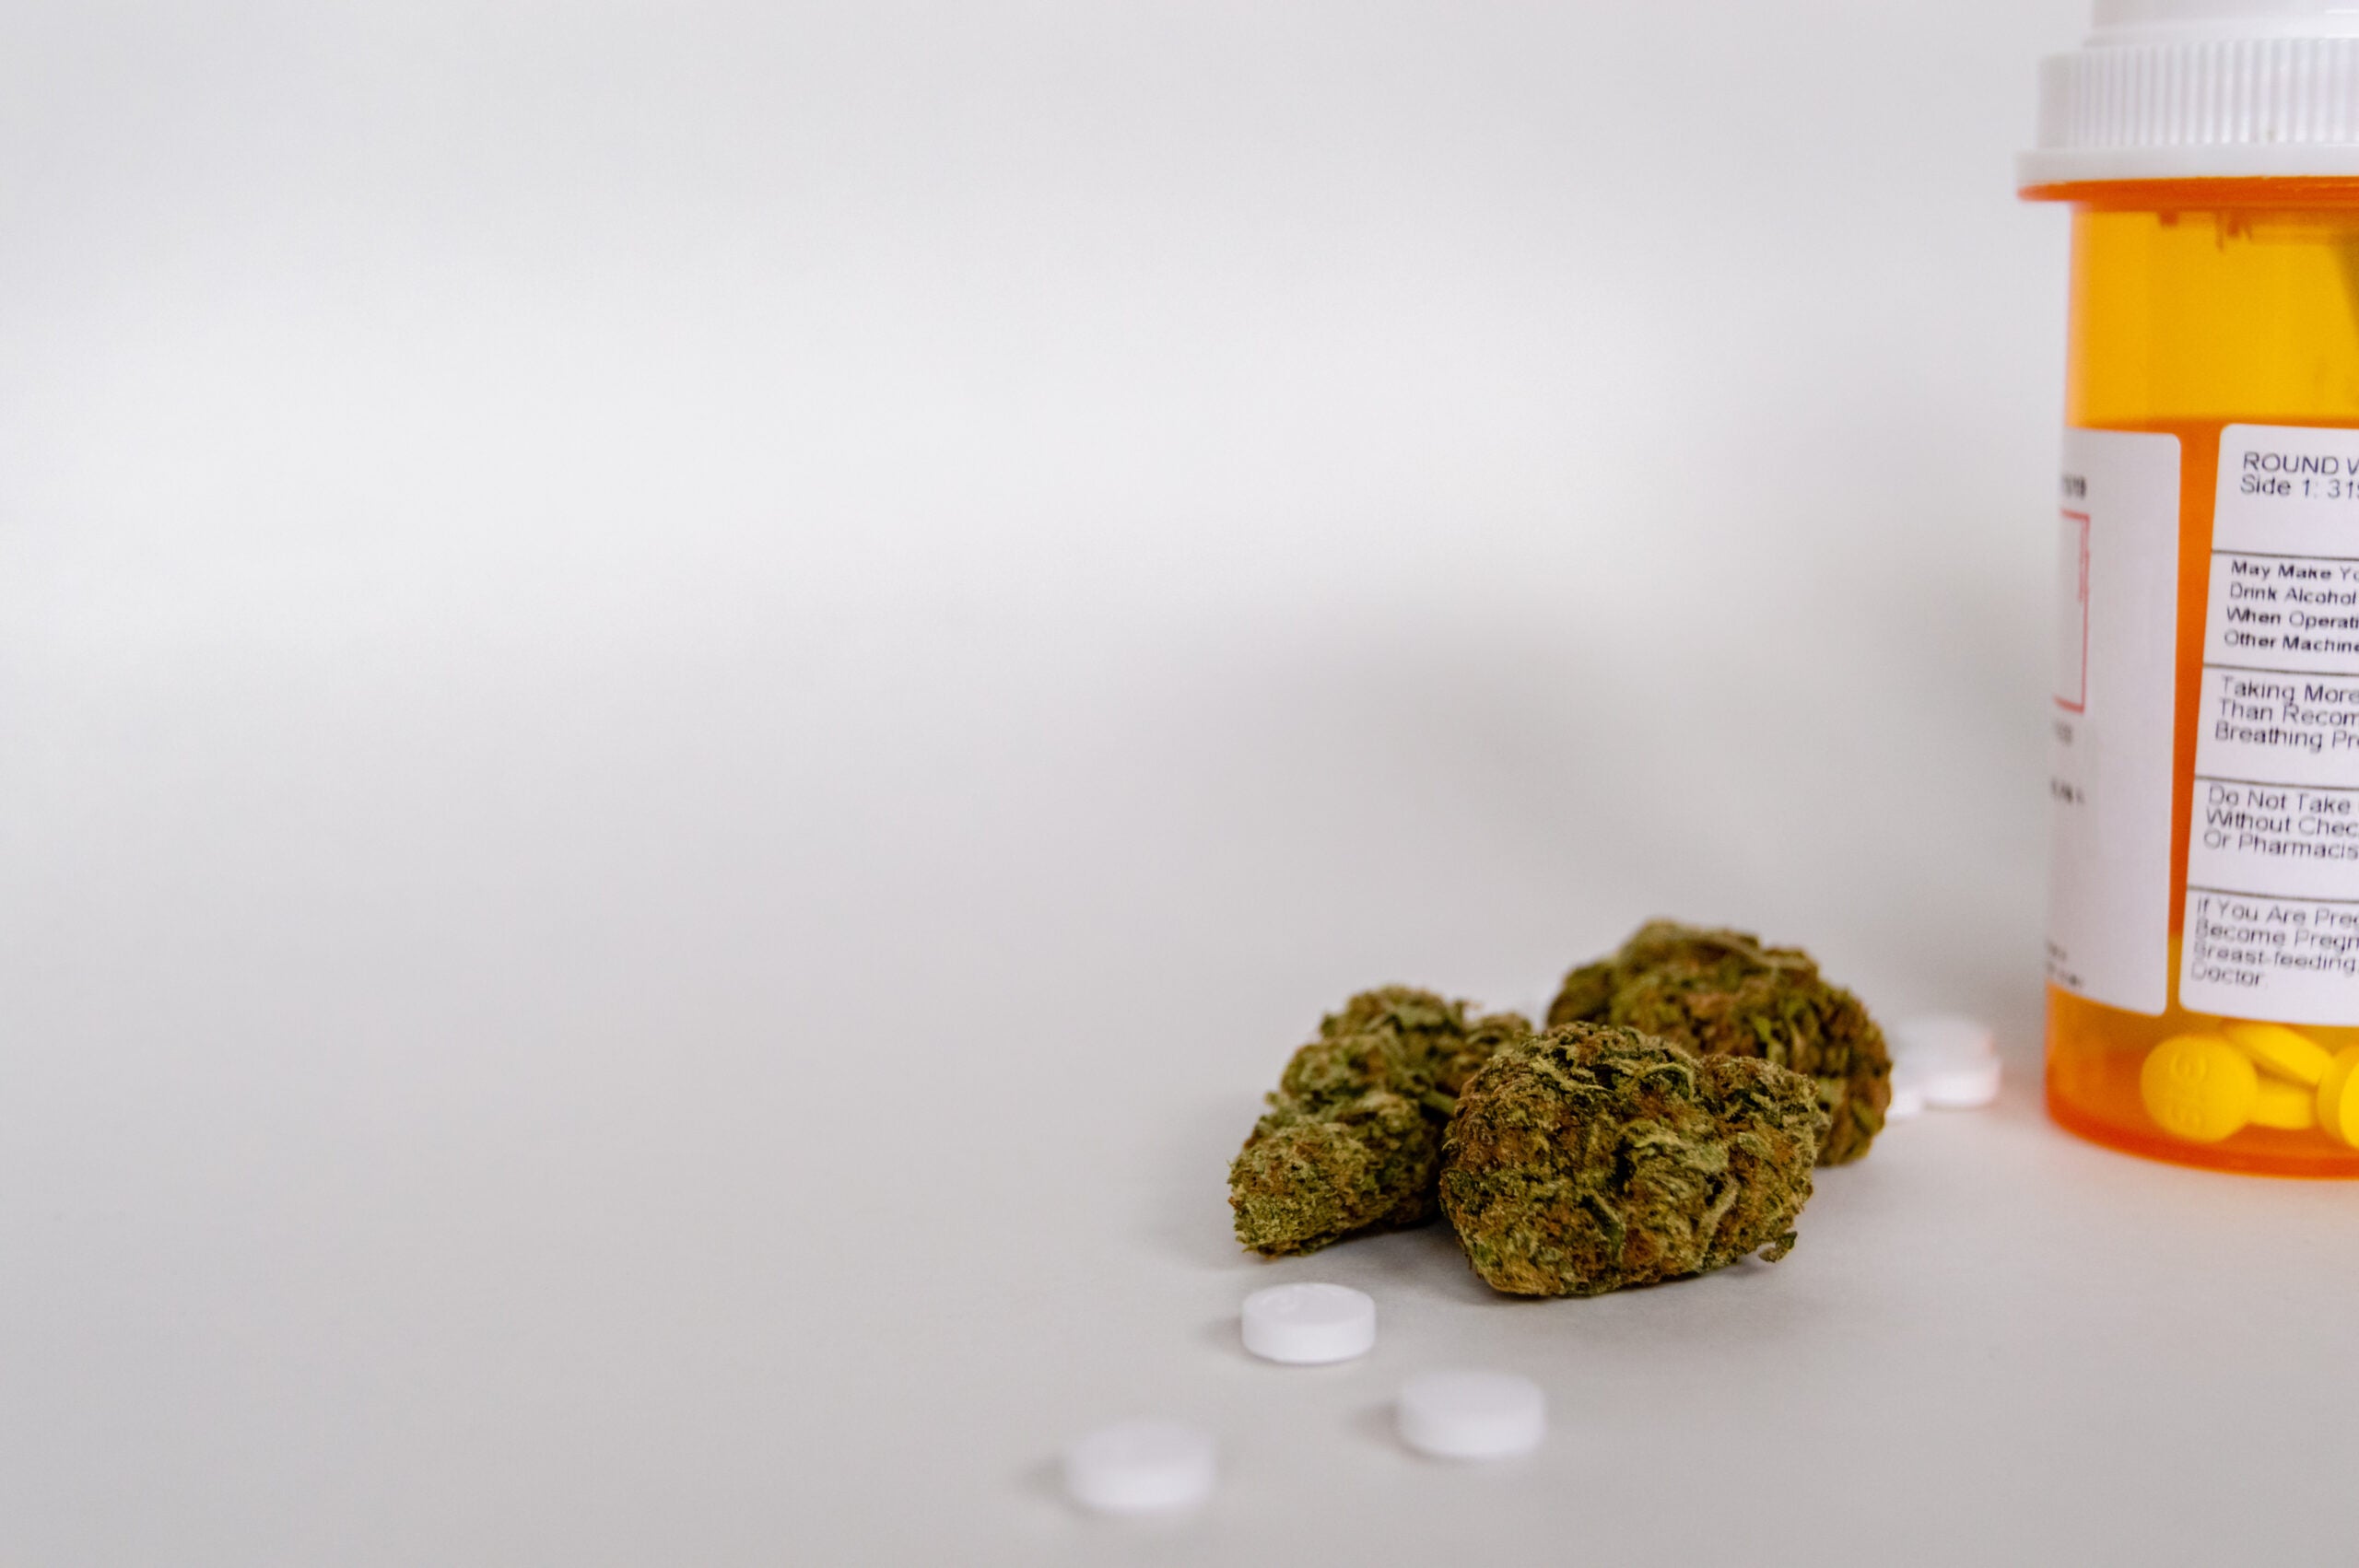 Cannabis Proving Effective To Help Opioid Addiction - Marijuana Packaging